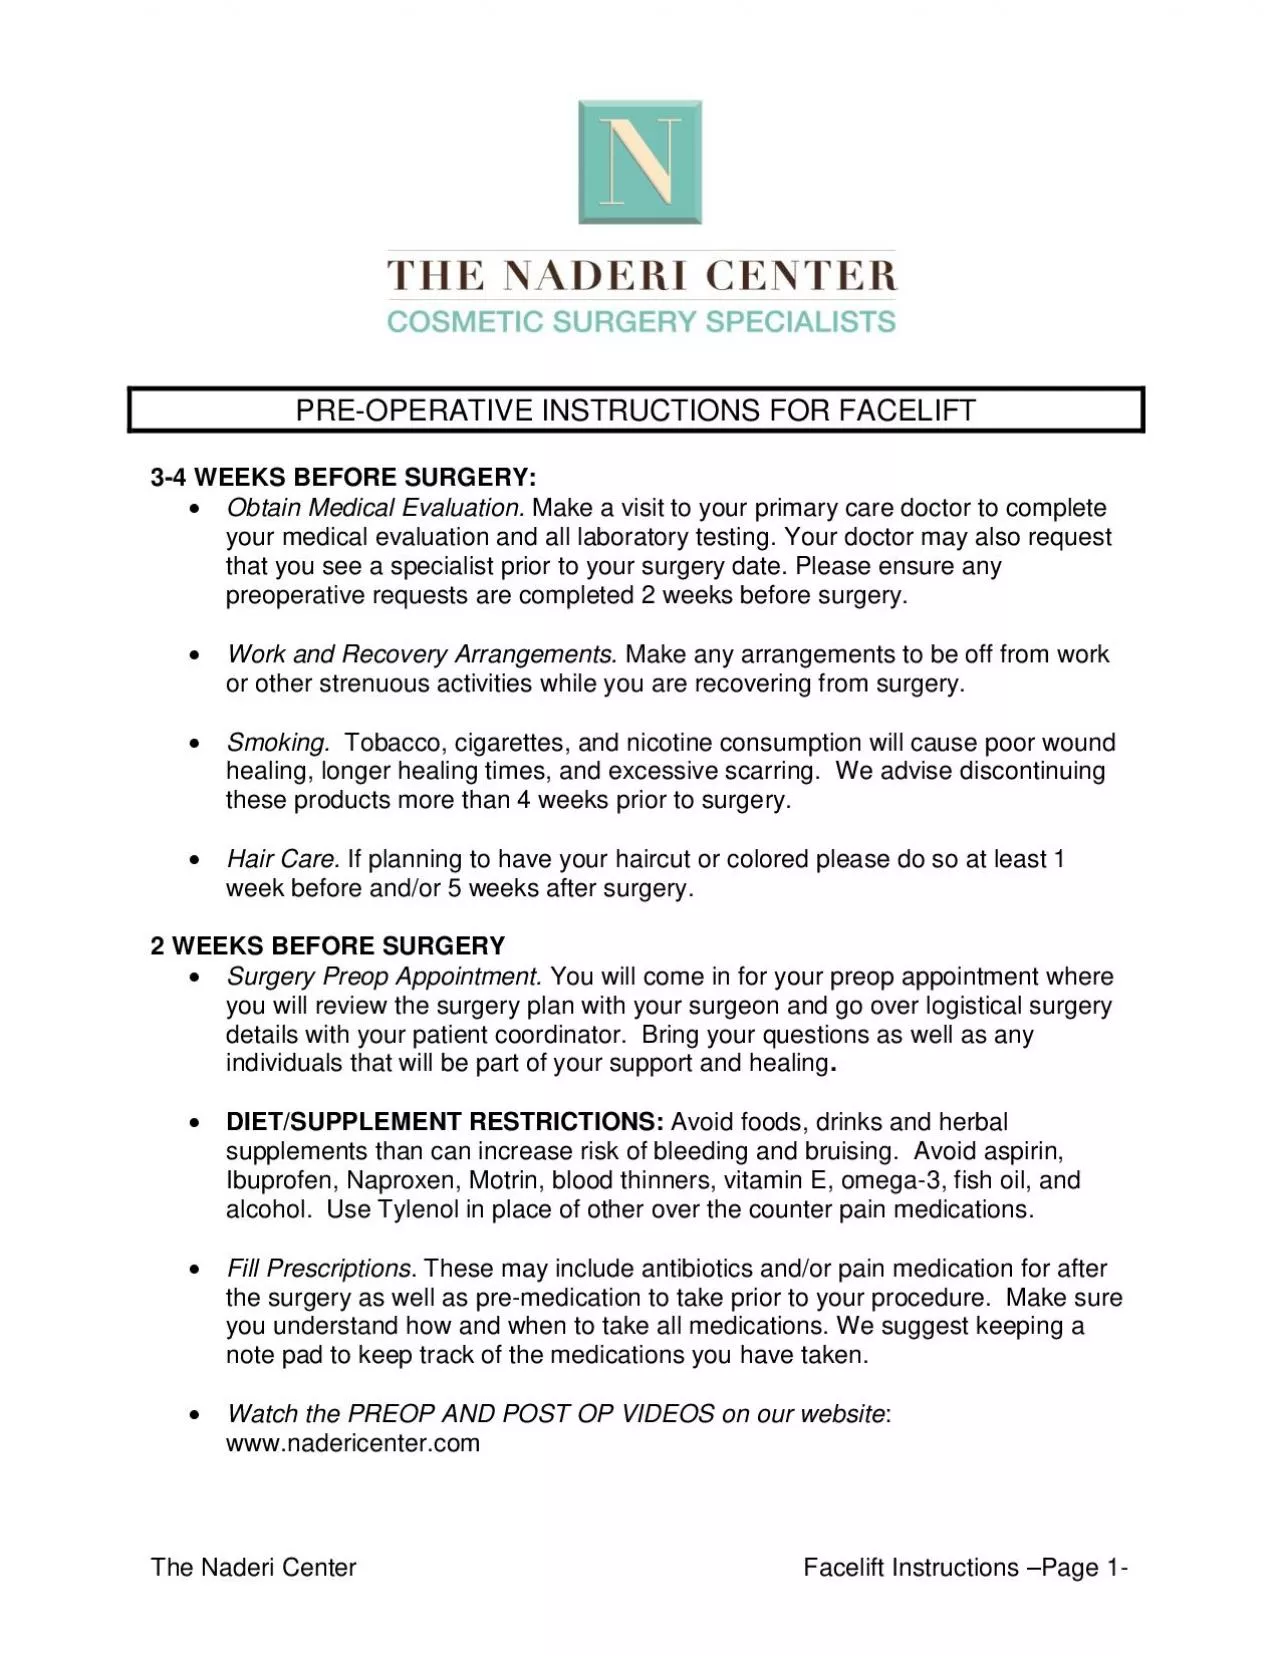 The Naderi Center